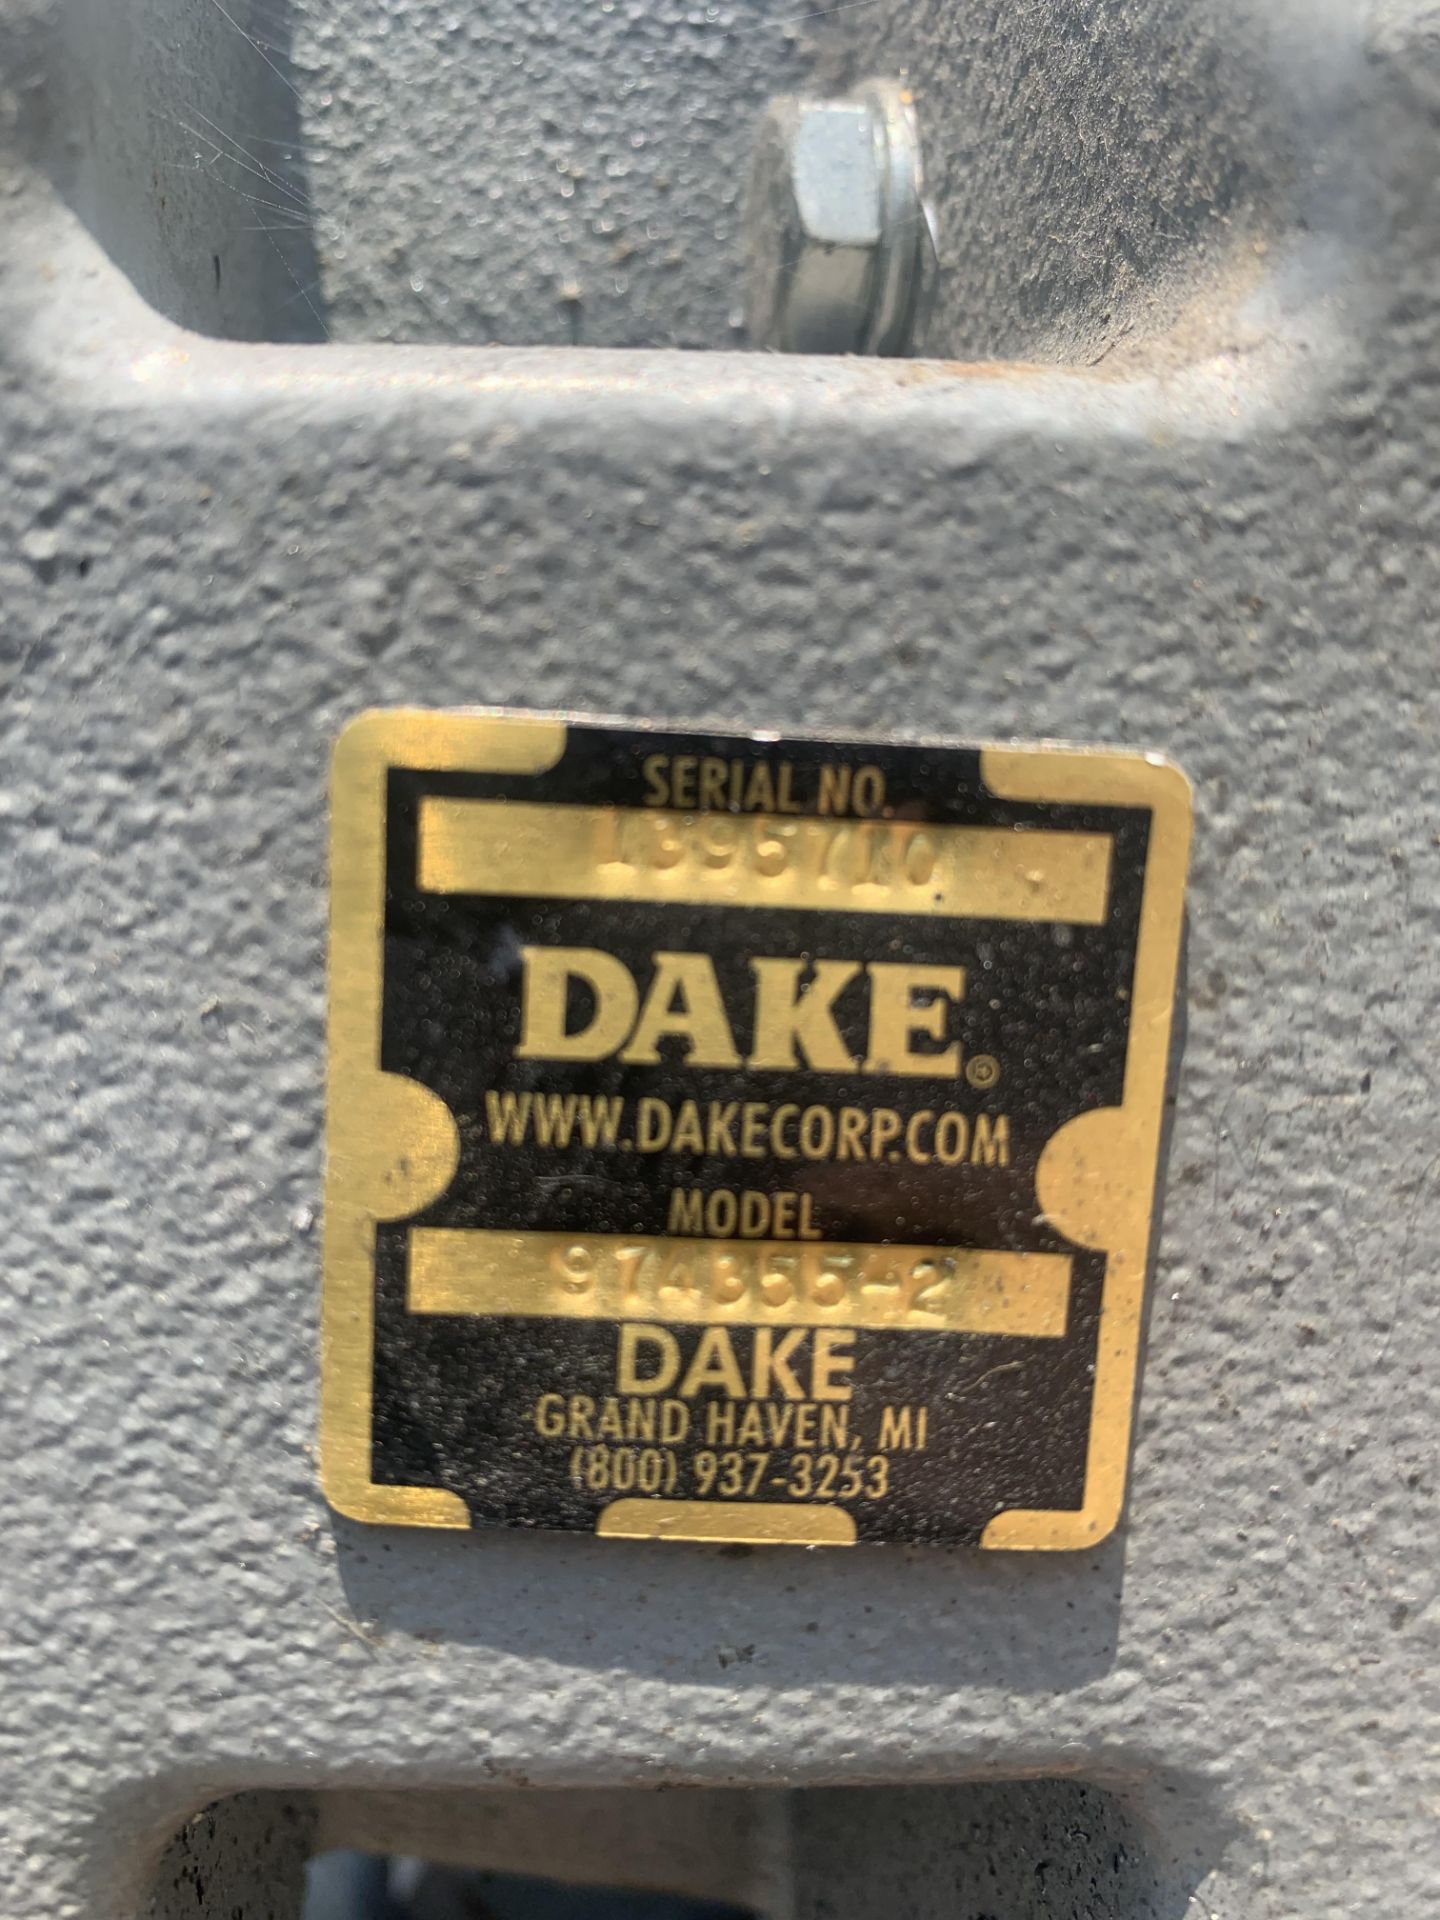 Dake Model 350 S Tech Cold Saw - Image 7 of 12